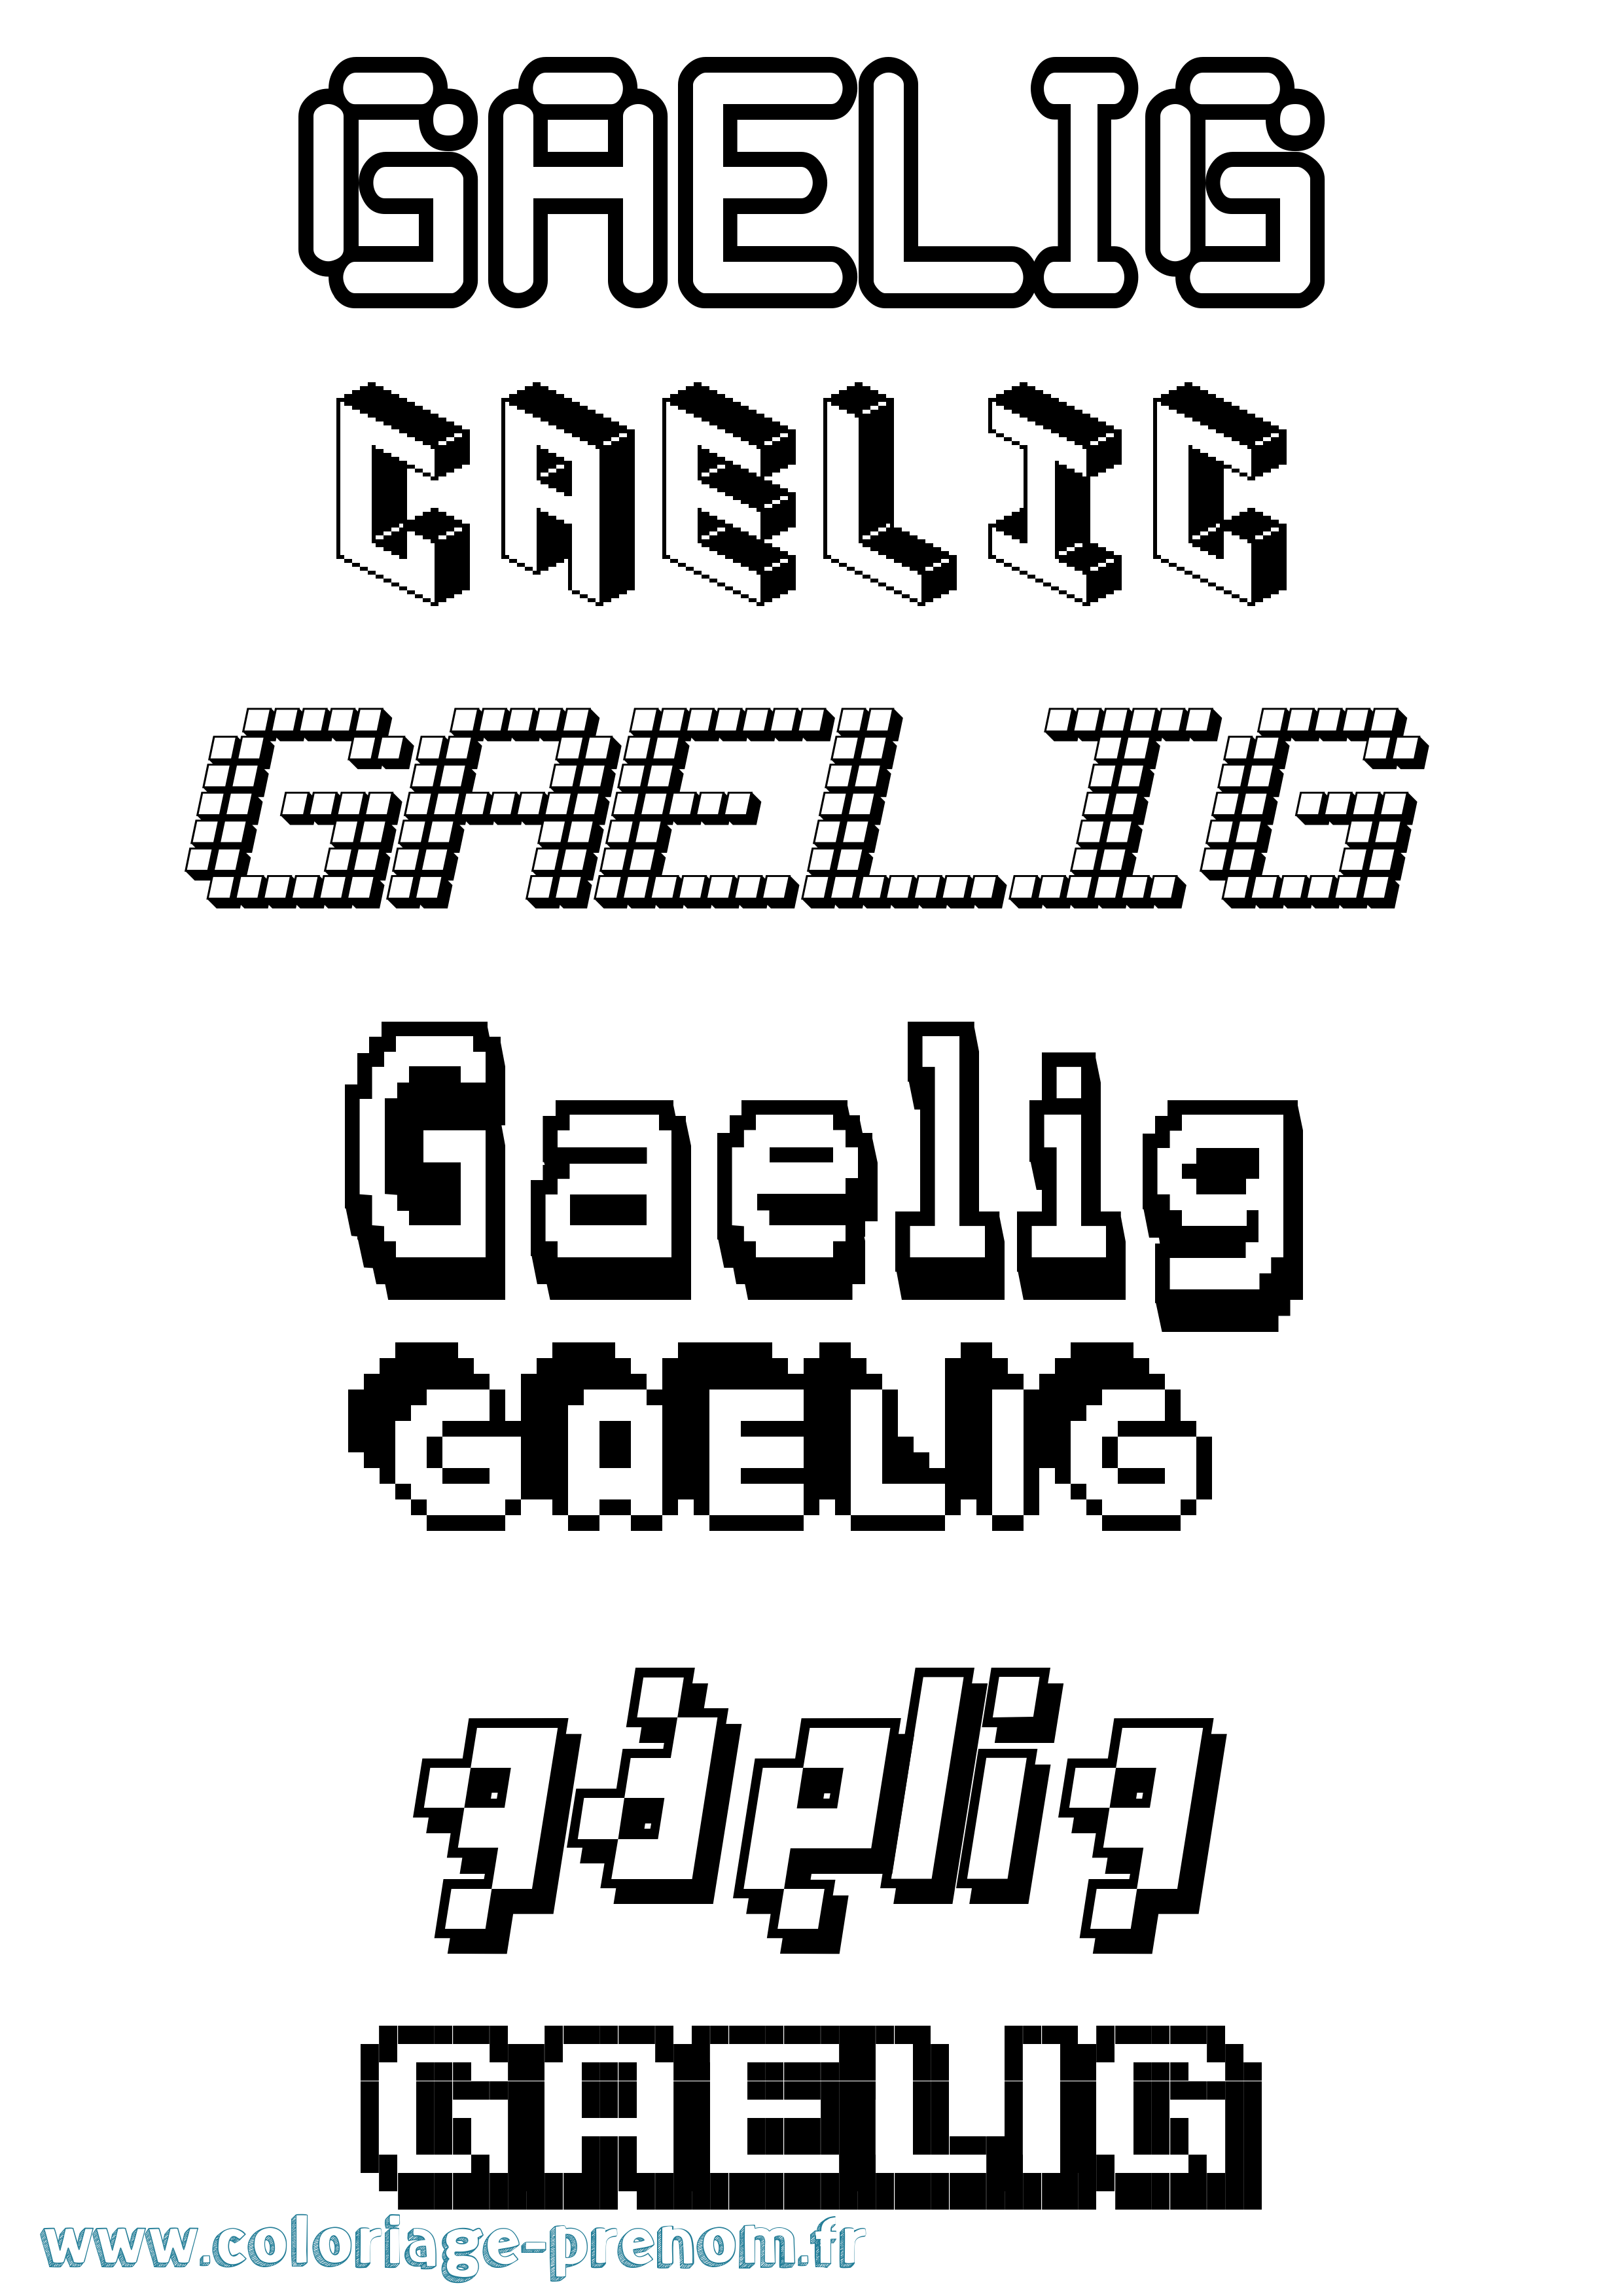 Coloriage prénom Gaelig Pixel